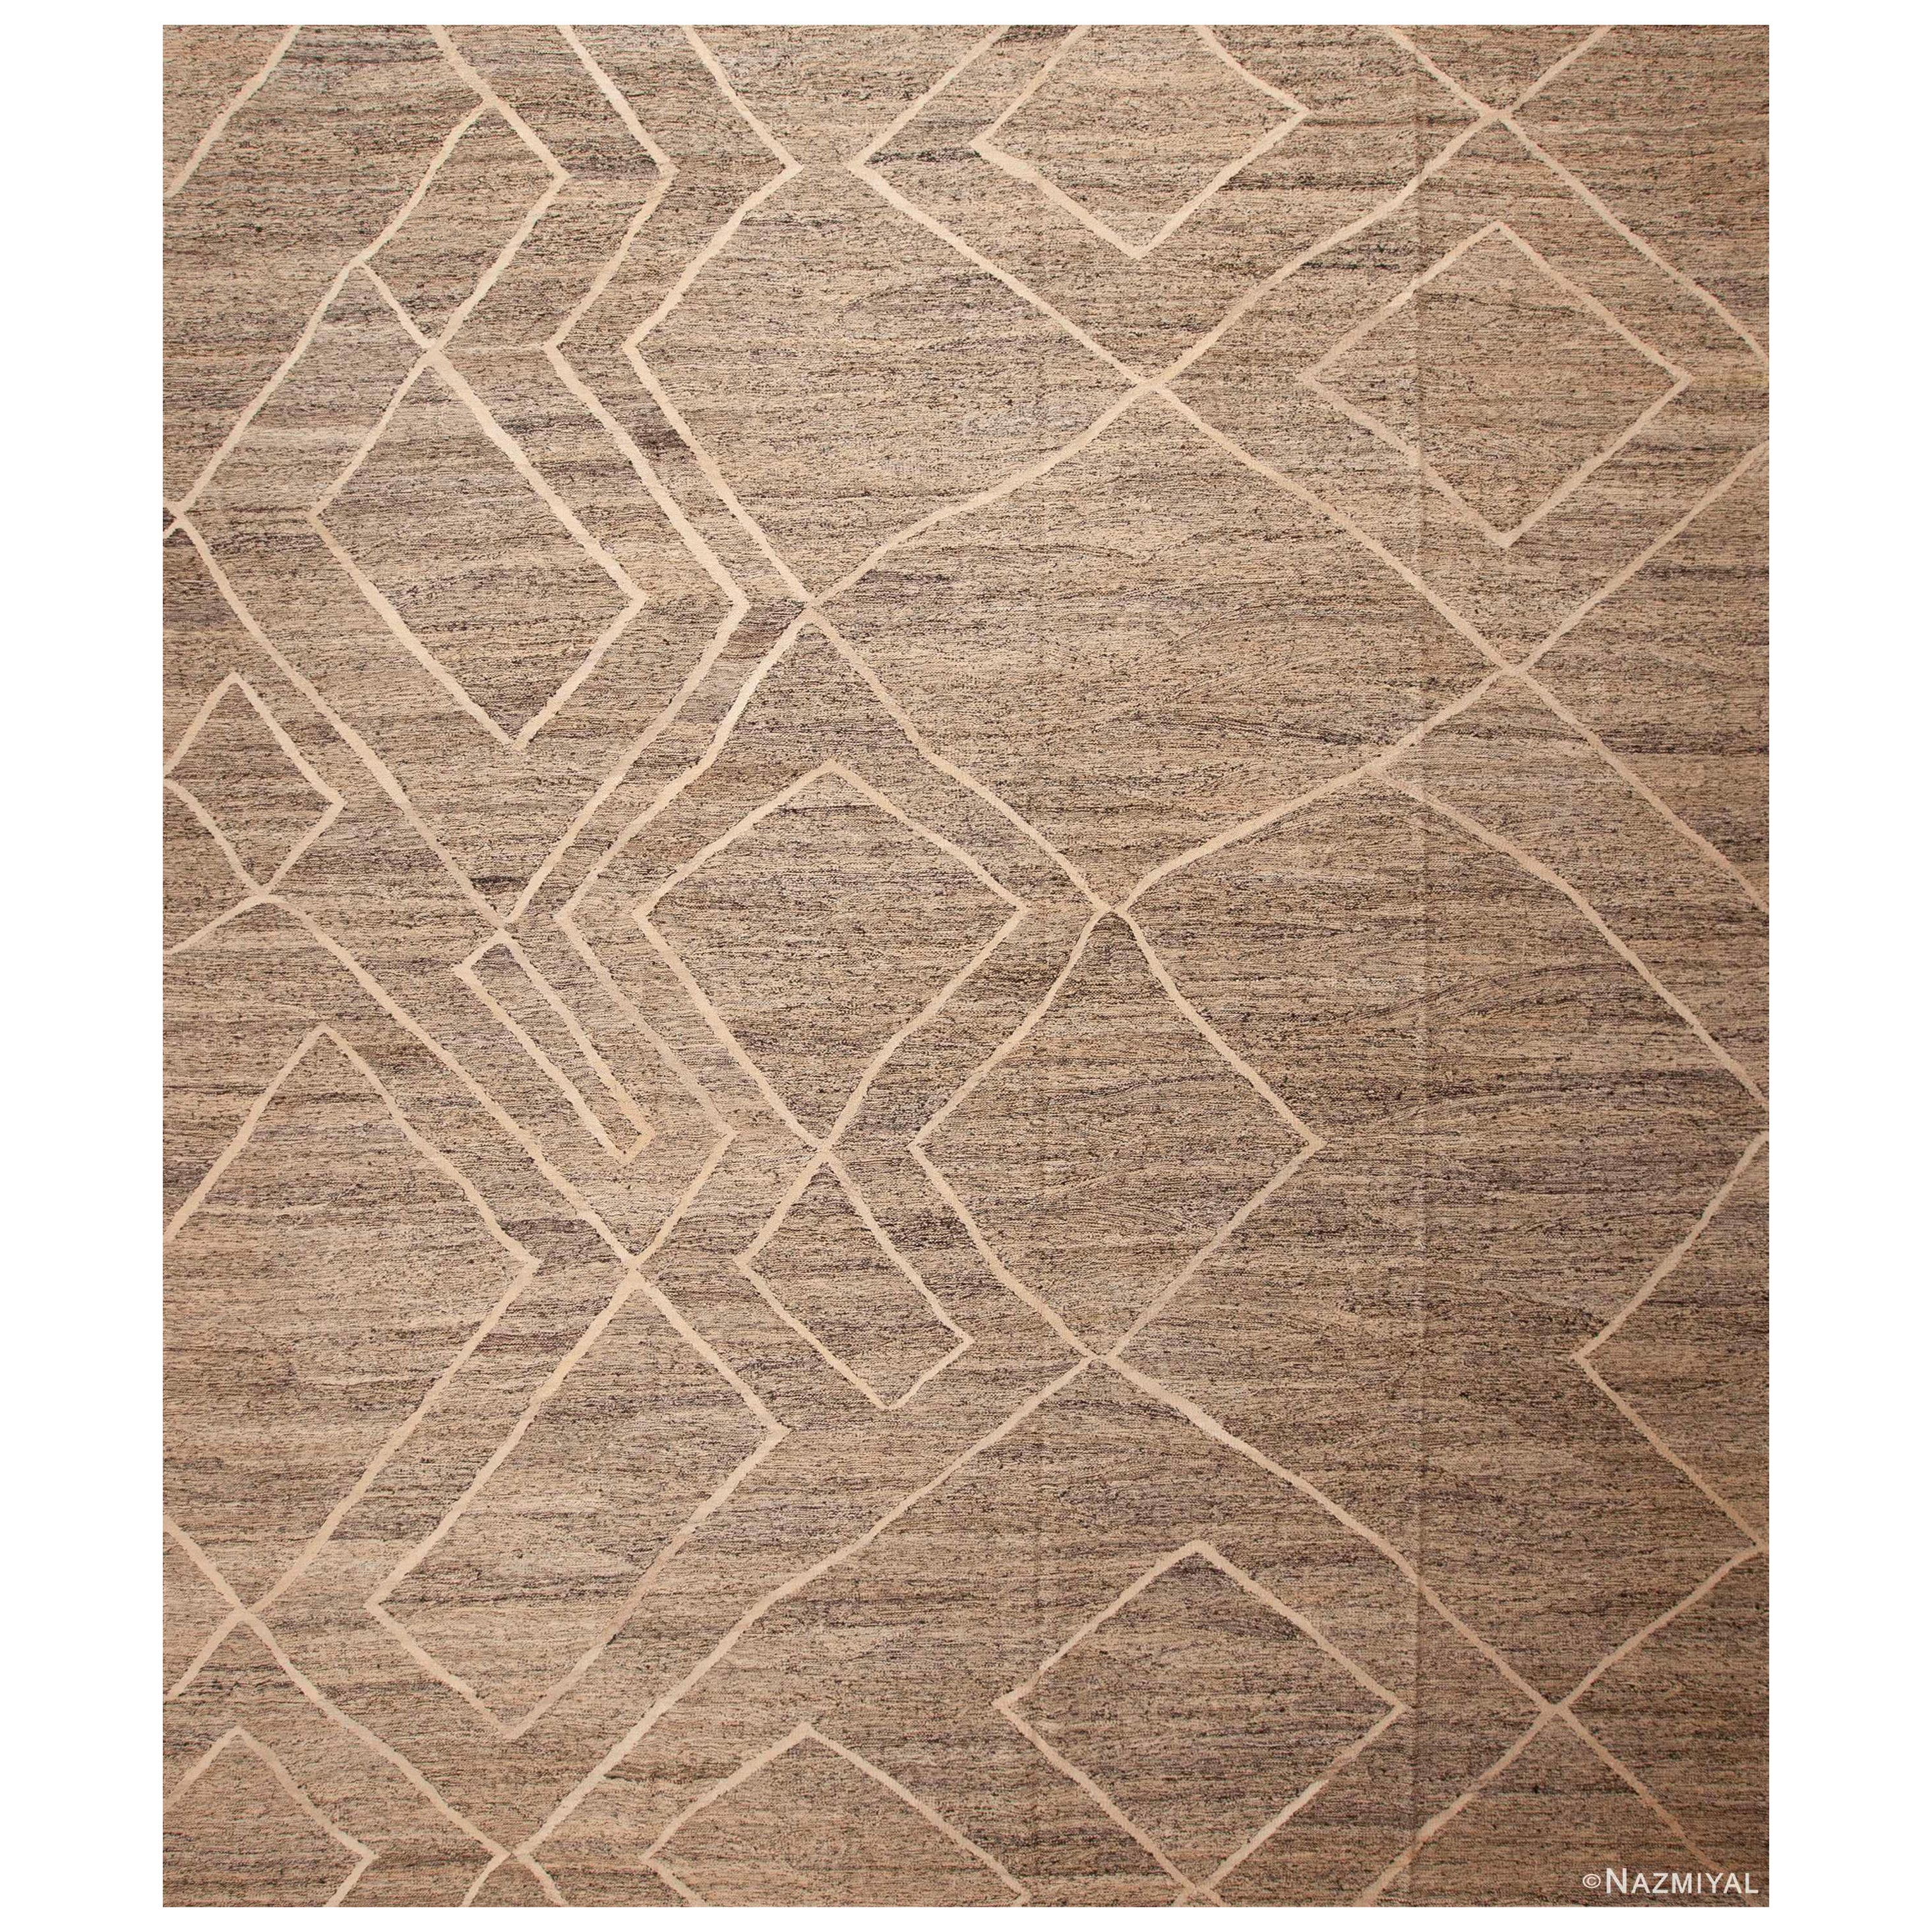 Nazmiyal Collection Tribal Geometric Modern Flatweave Kilim Rug 13'6" x 15'7"